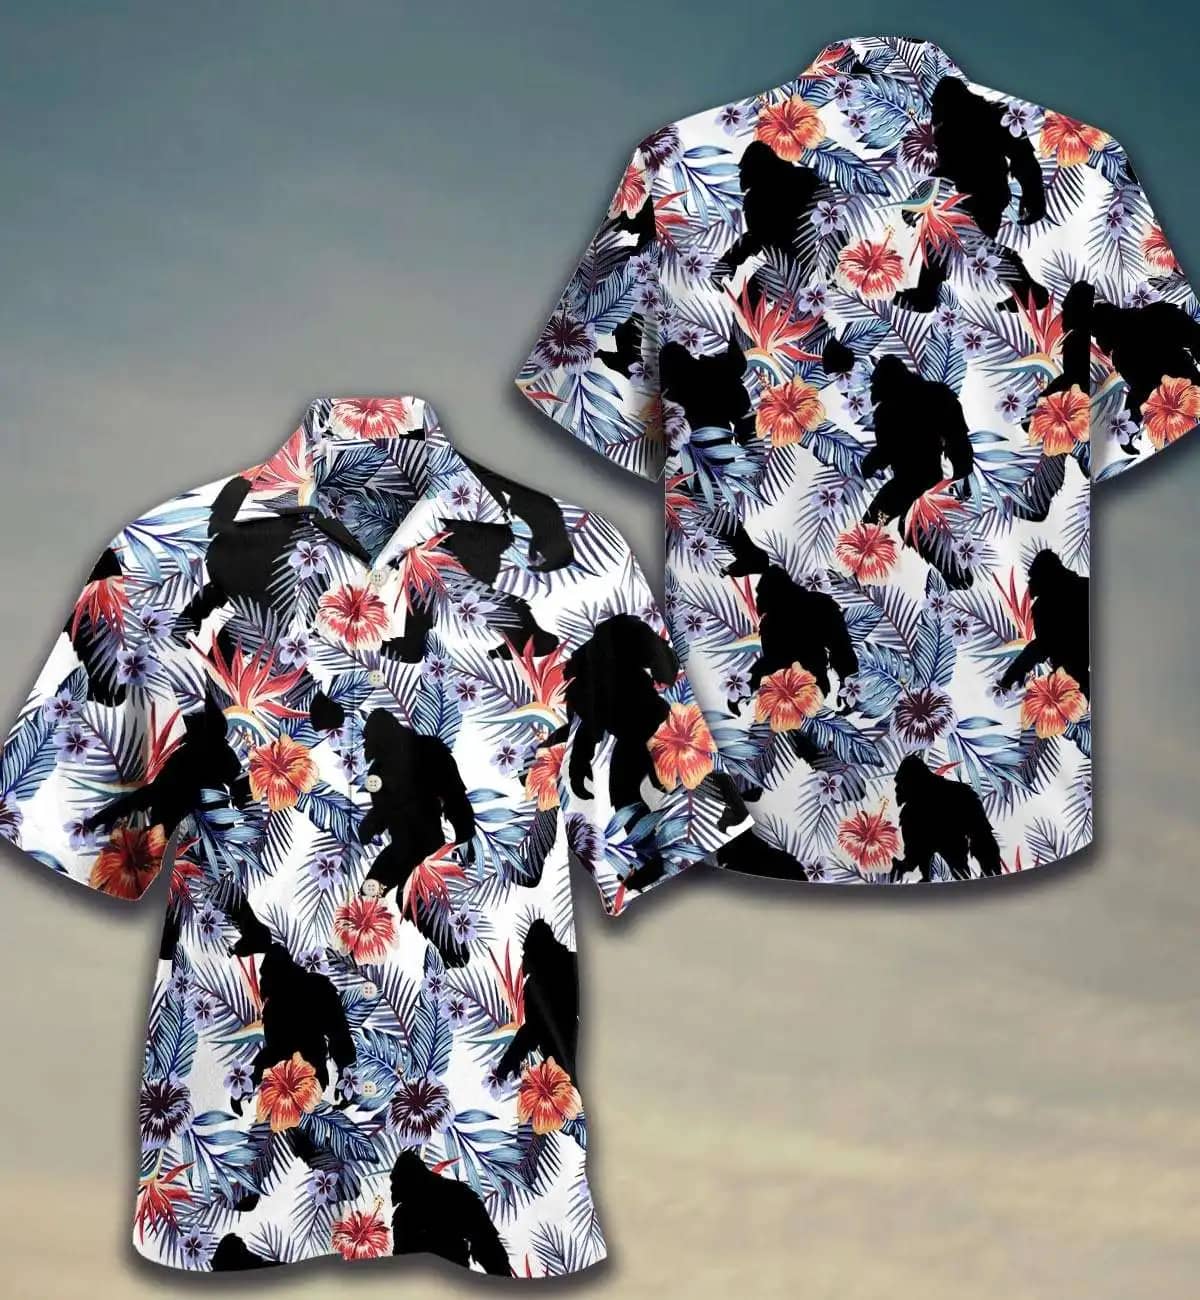 Bigfoot Sasquatch Folklore Creature Floral Pattern Summer Vacation Hawaiian Shirts